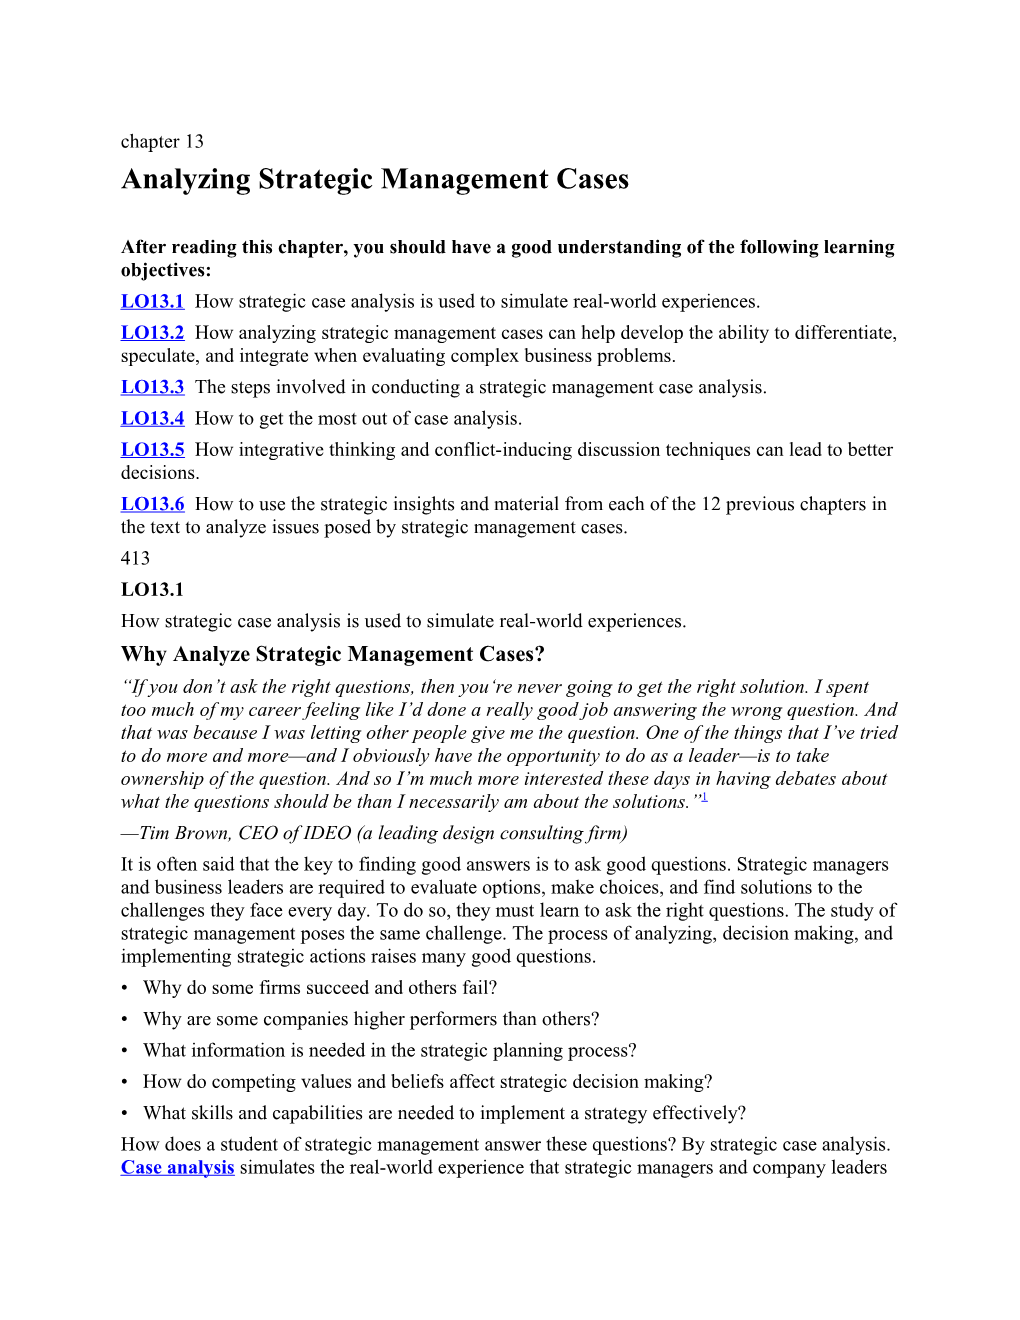 Analyzing Strategic Management Cases